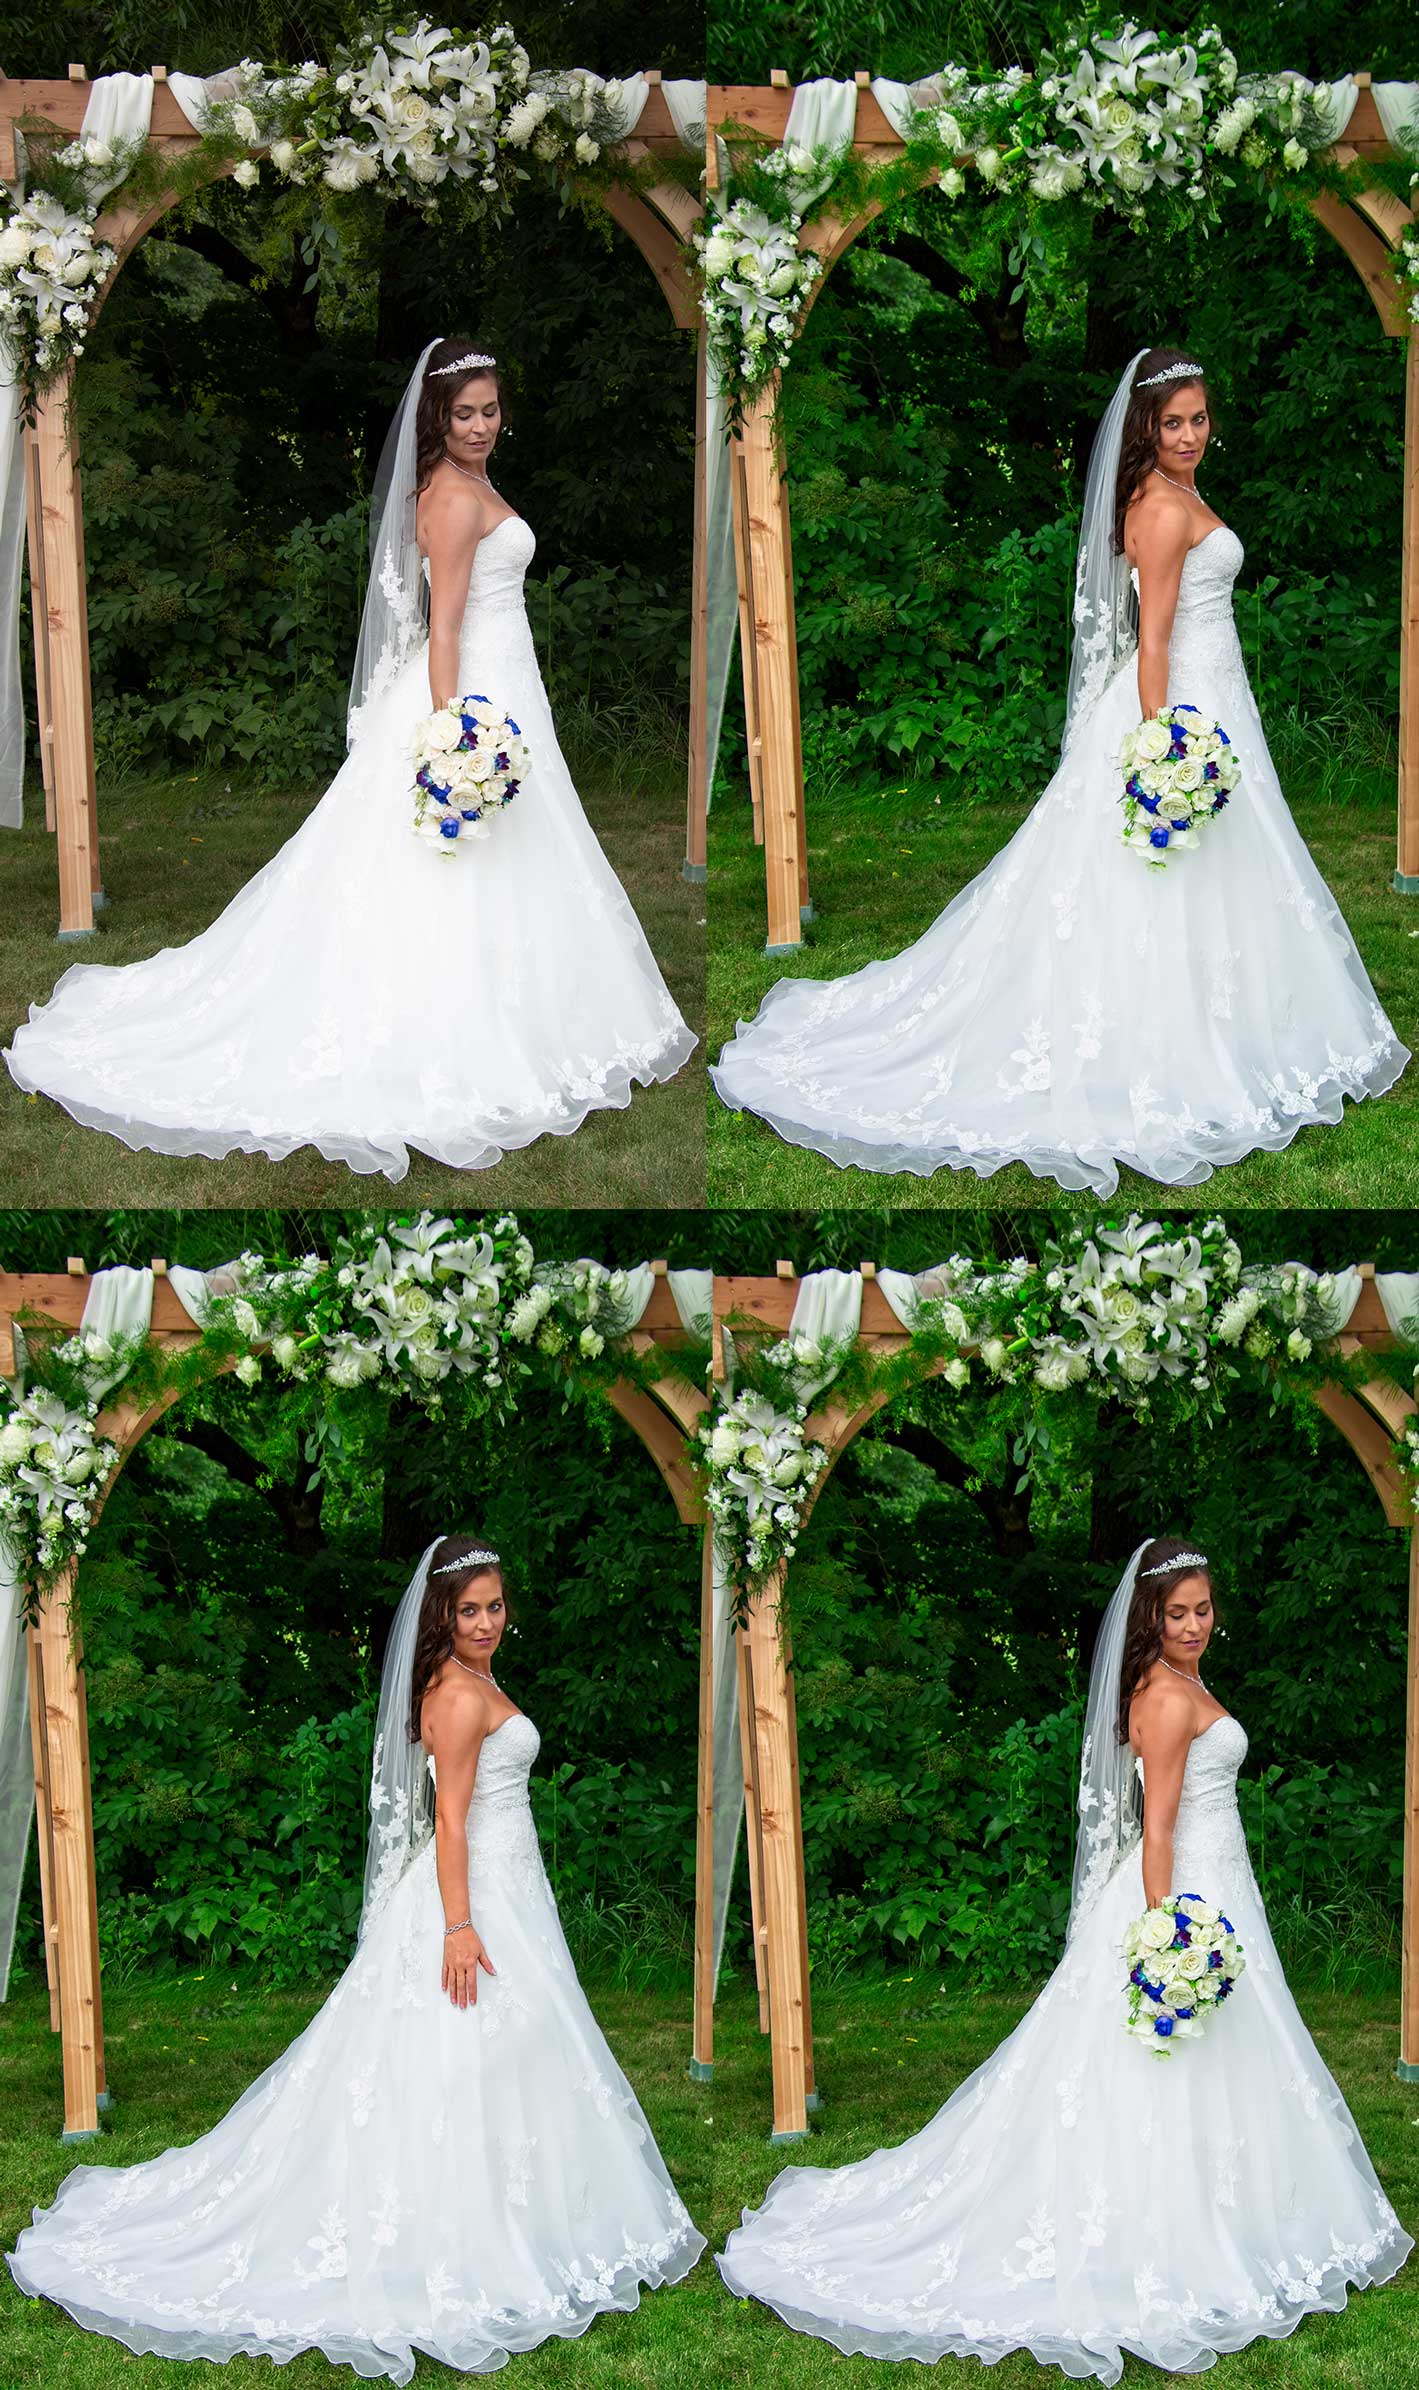 bride comparison image